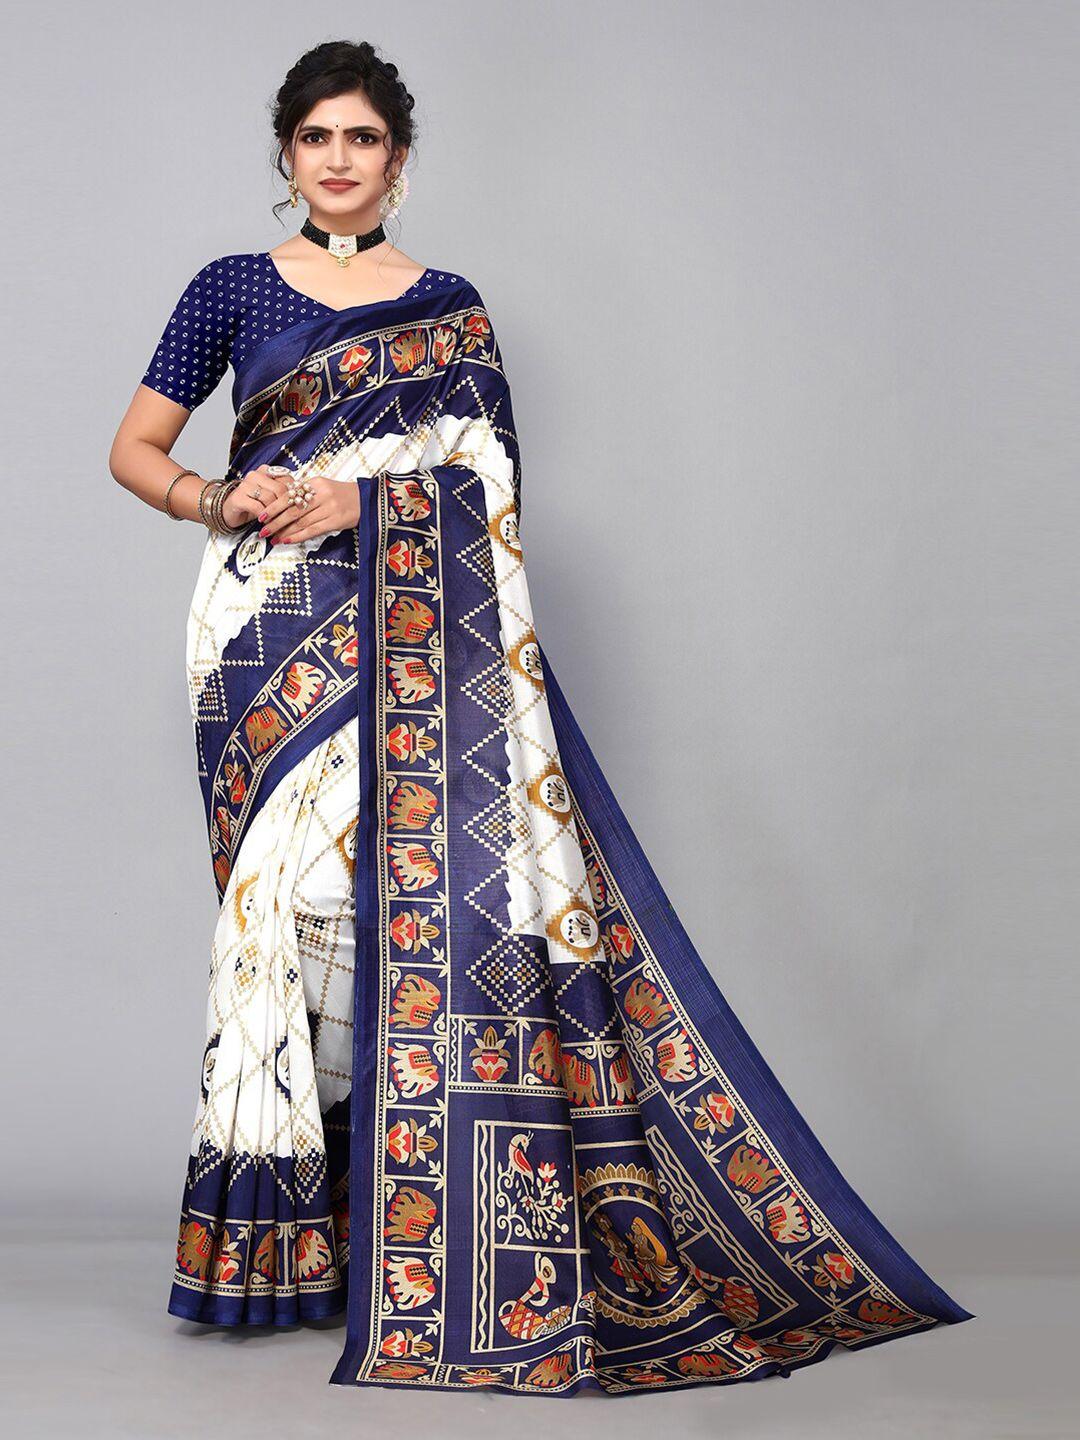 kalini ethinic motif printed saree